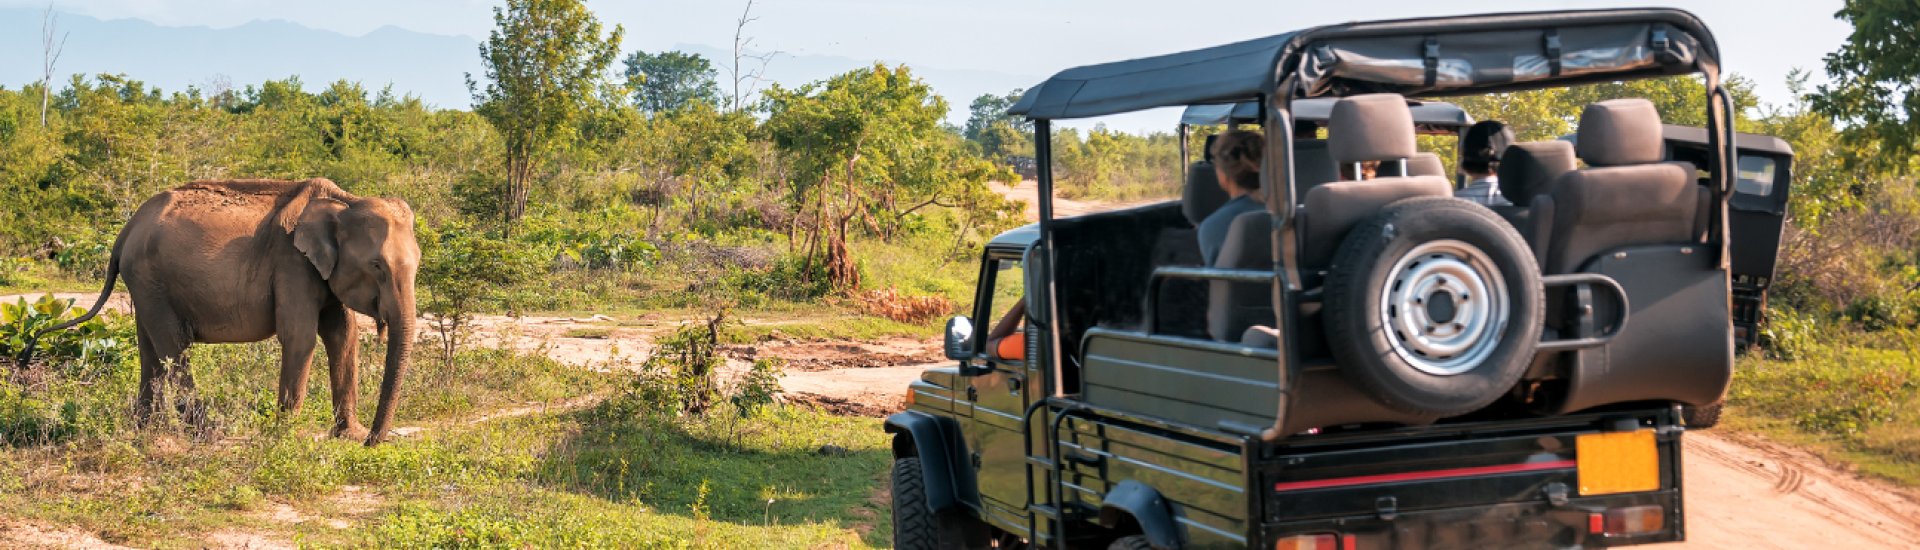 Safari Jeep Elephant